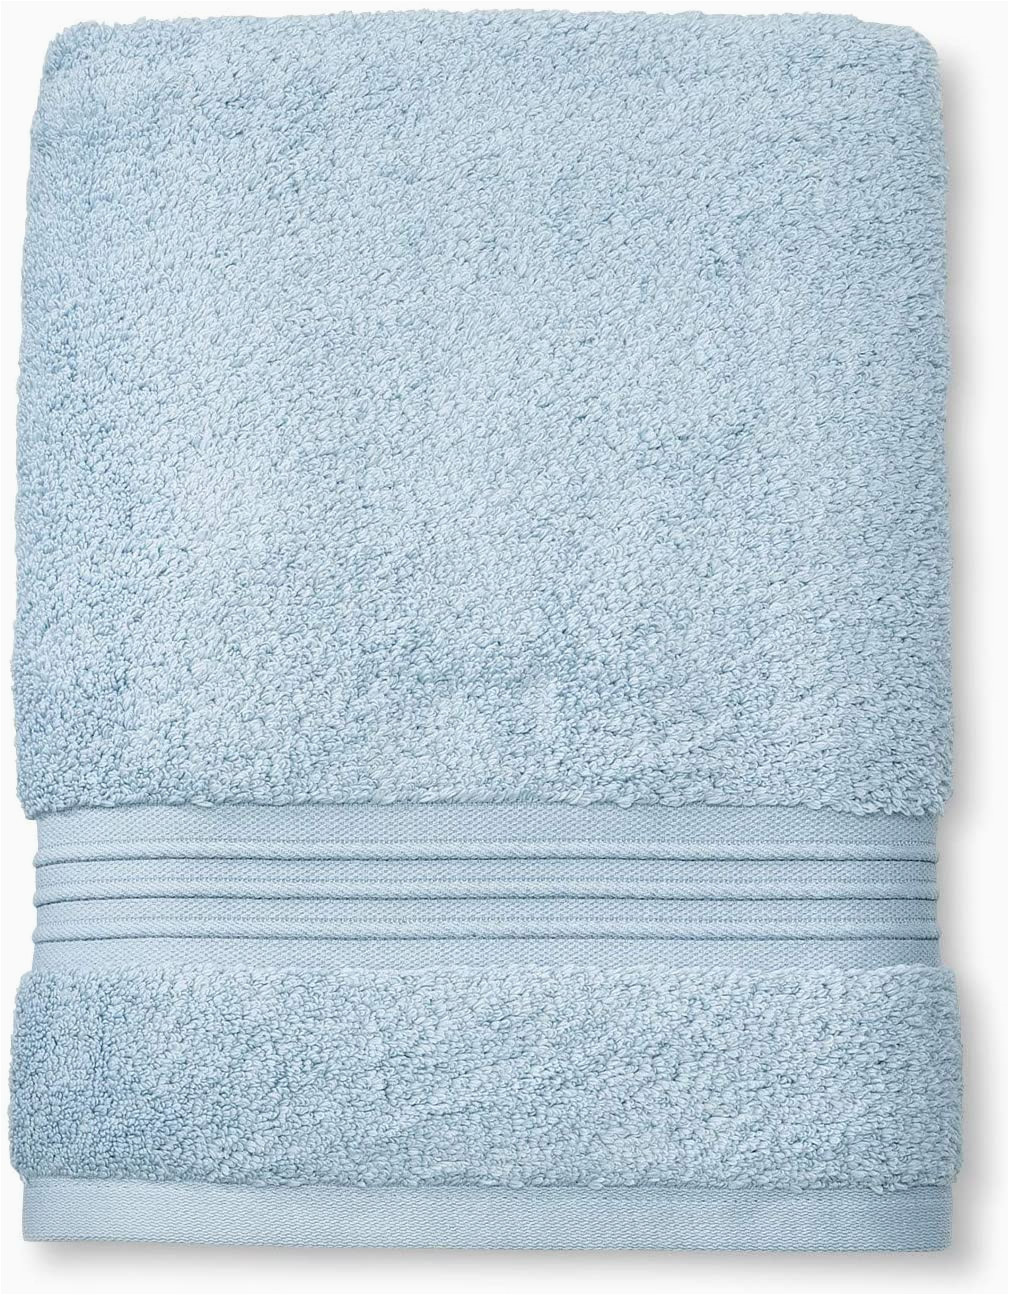 Fieldcrest Bath Rug Sets Fieldcrest Spa Collection Glowing Blue Bath towel